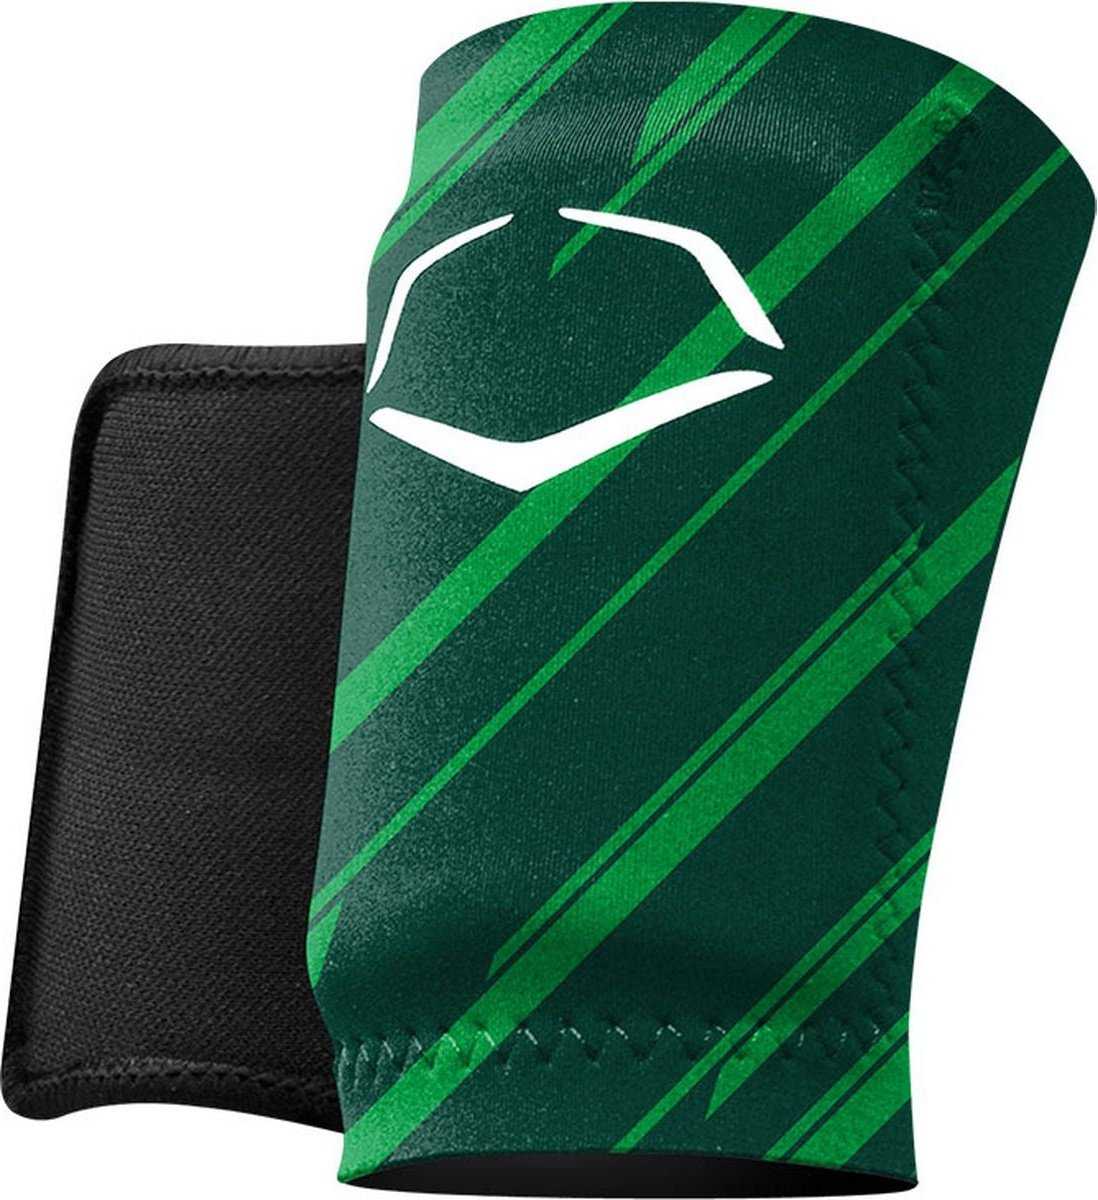 EvoShield Protective Wrist Guard - Stripe Green - HIT A Double